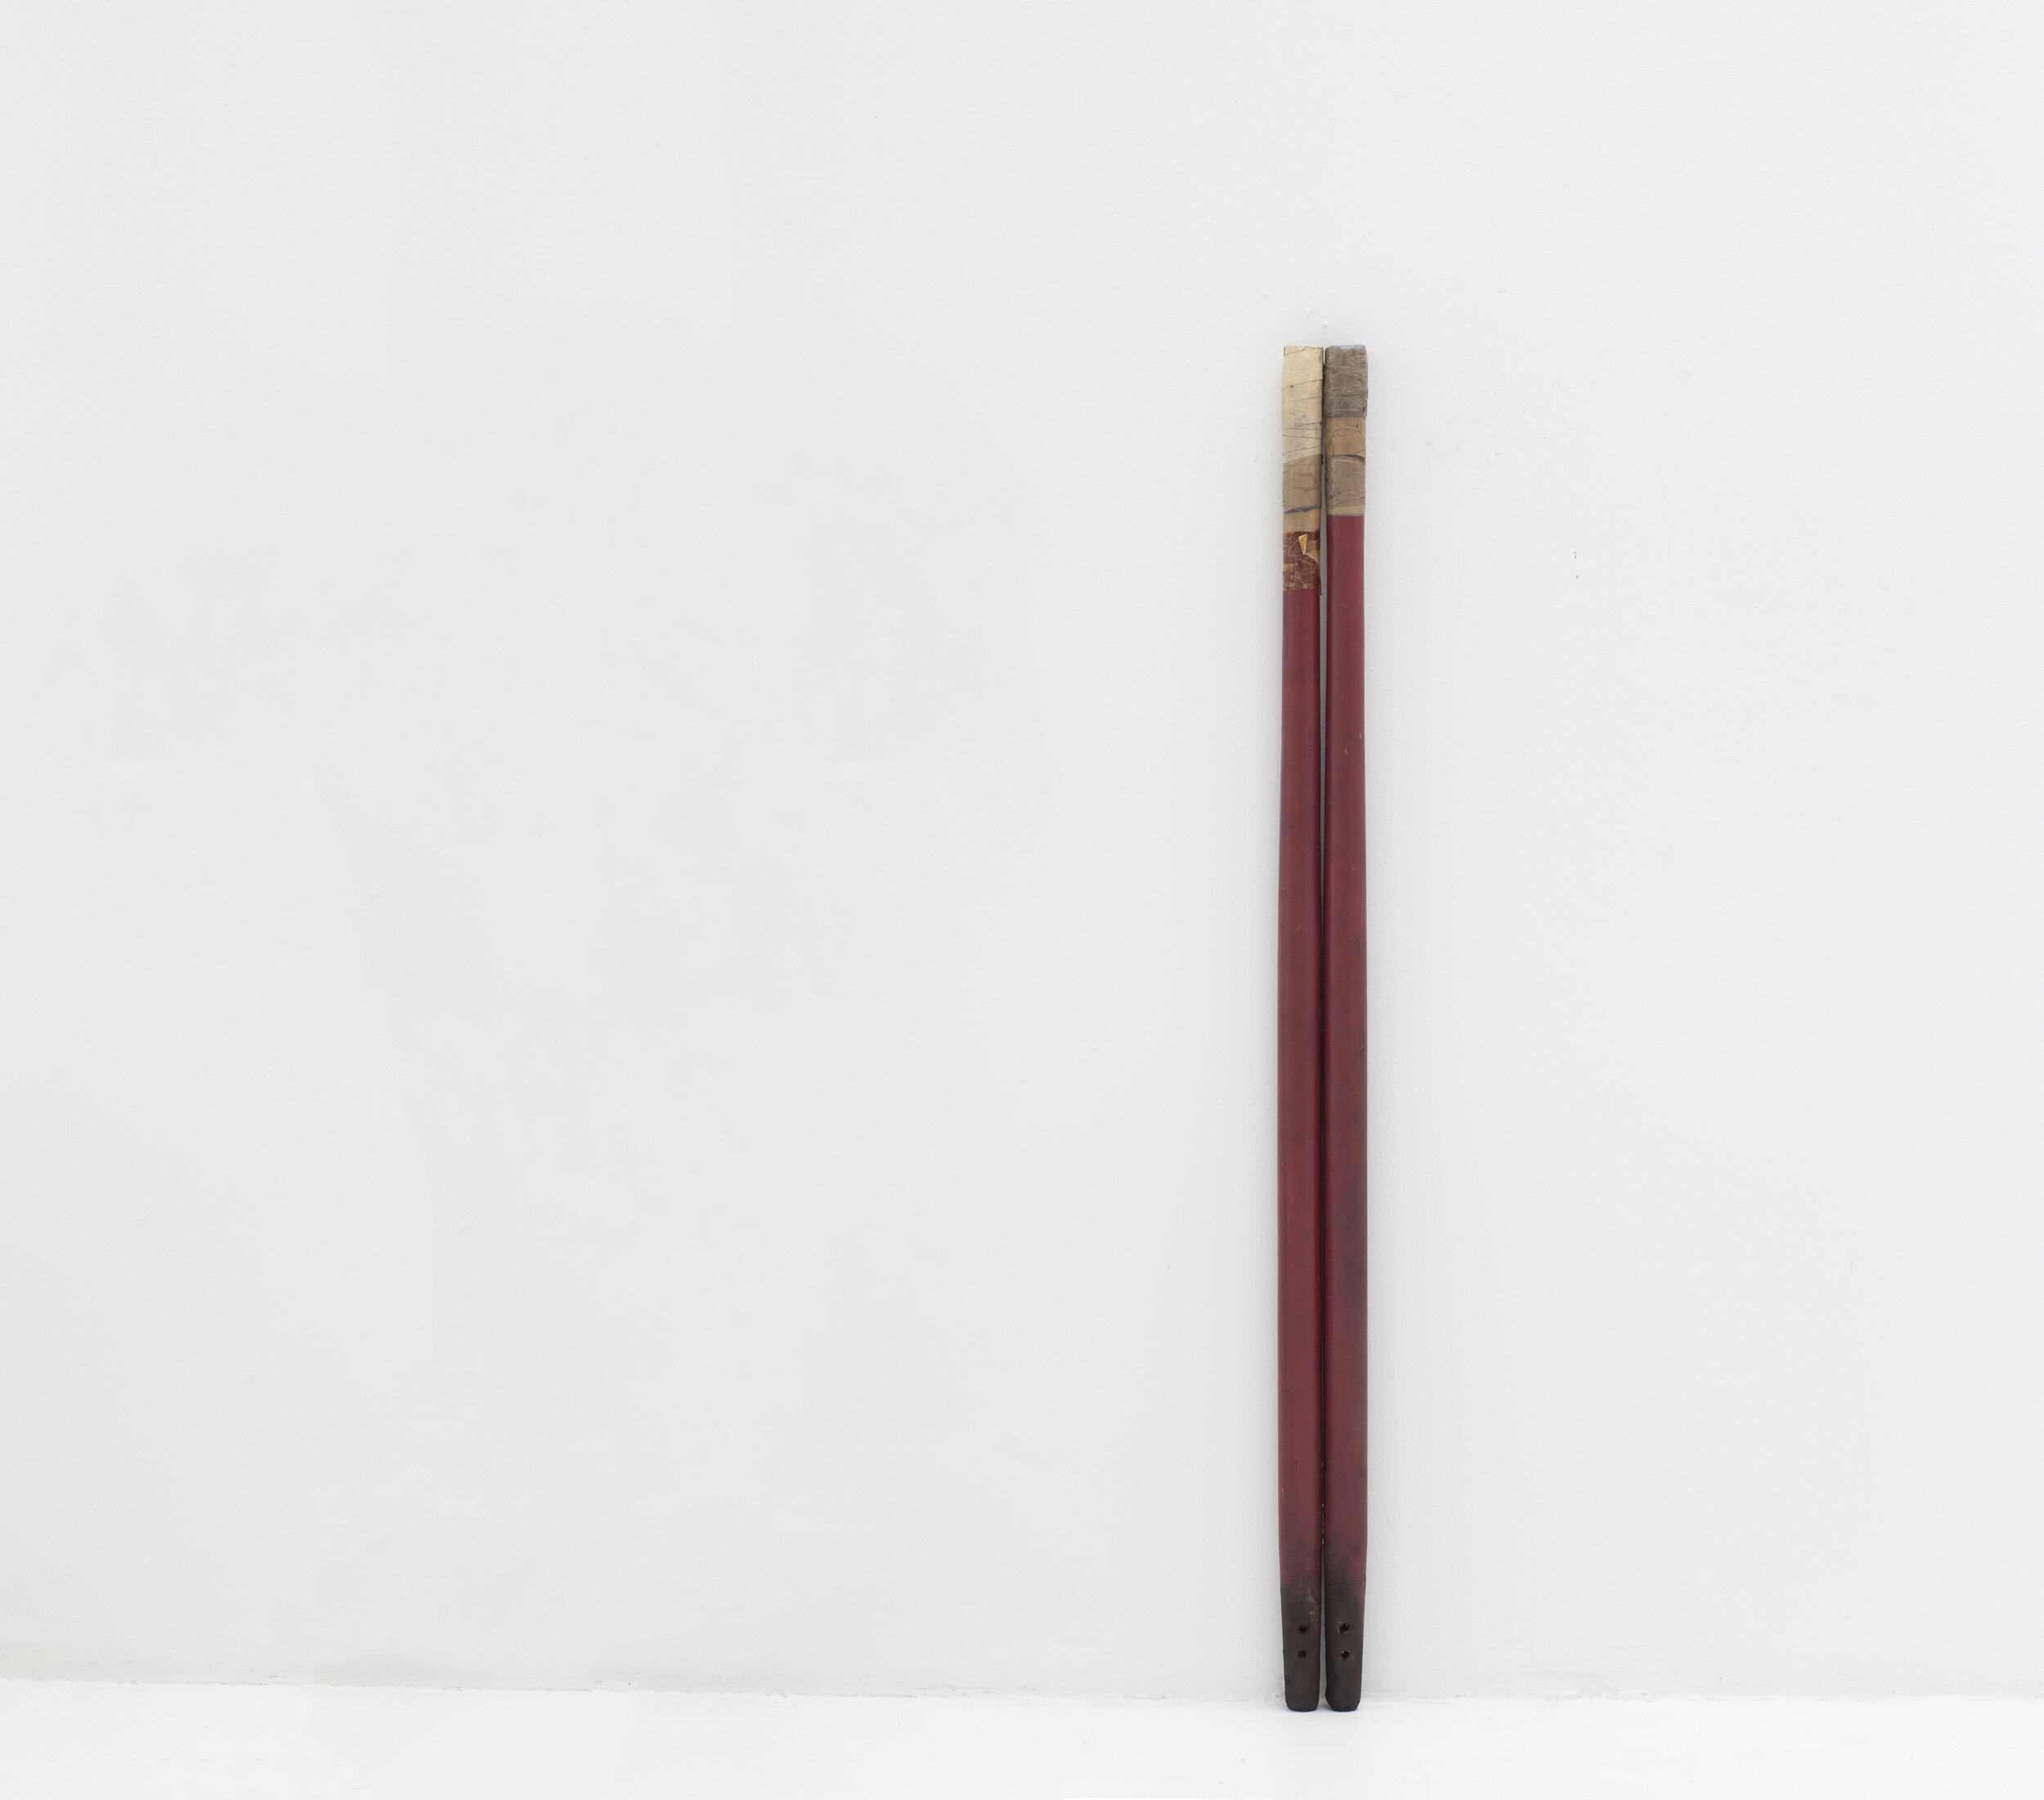  Jonathan Mildenberg  Untitled (Father and son) , 2020 wood shovel handles, paint, tape, dirt, ash,  blood, pigment, bone, flock, wire, hardware 46 x 3 x 1.5 inches (117 x 8 x 4 cm) JM10 